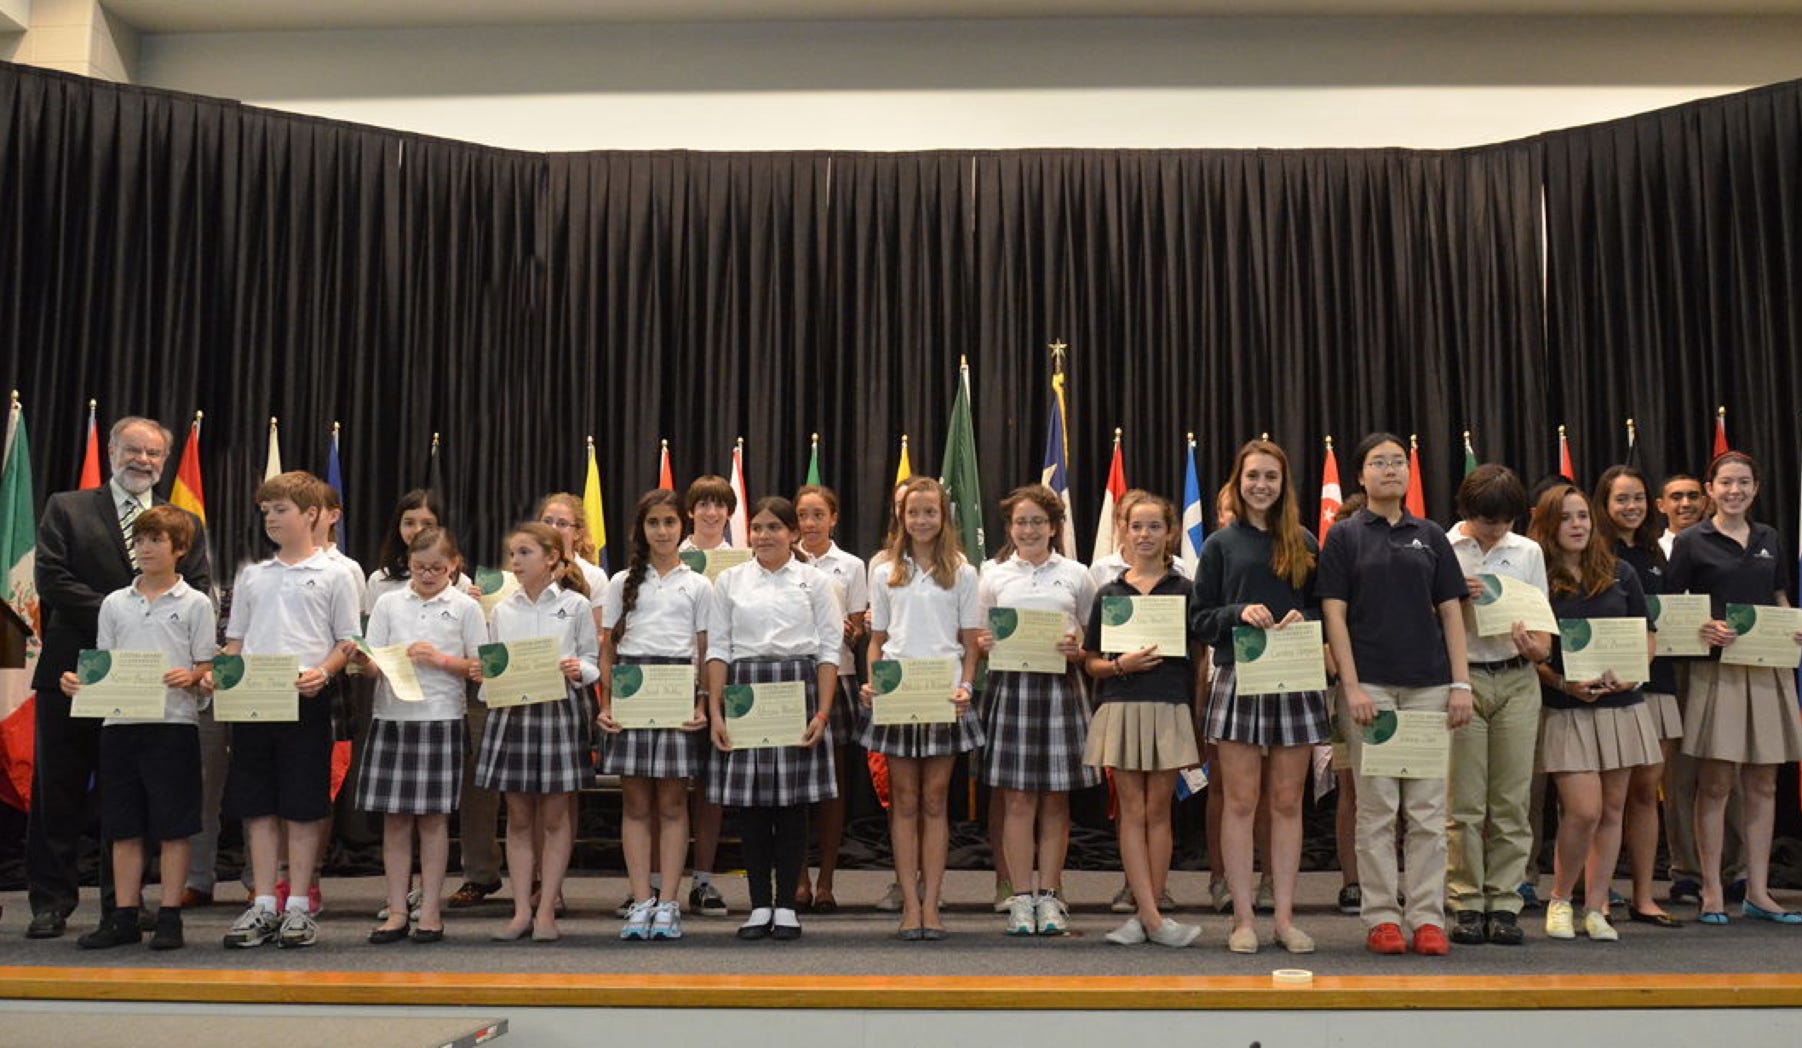 Awards presentation at The Awty International School, Houston, 2013